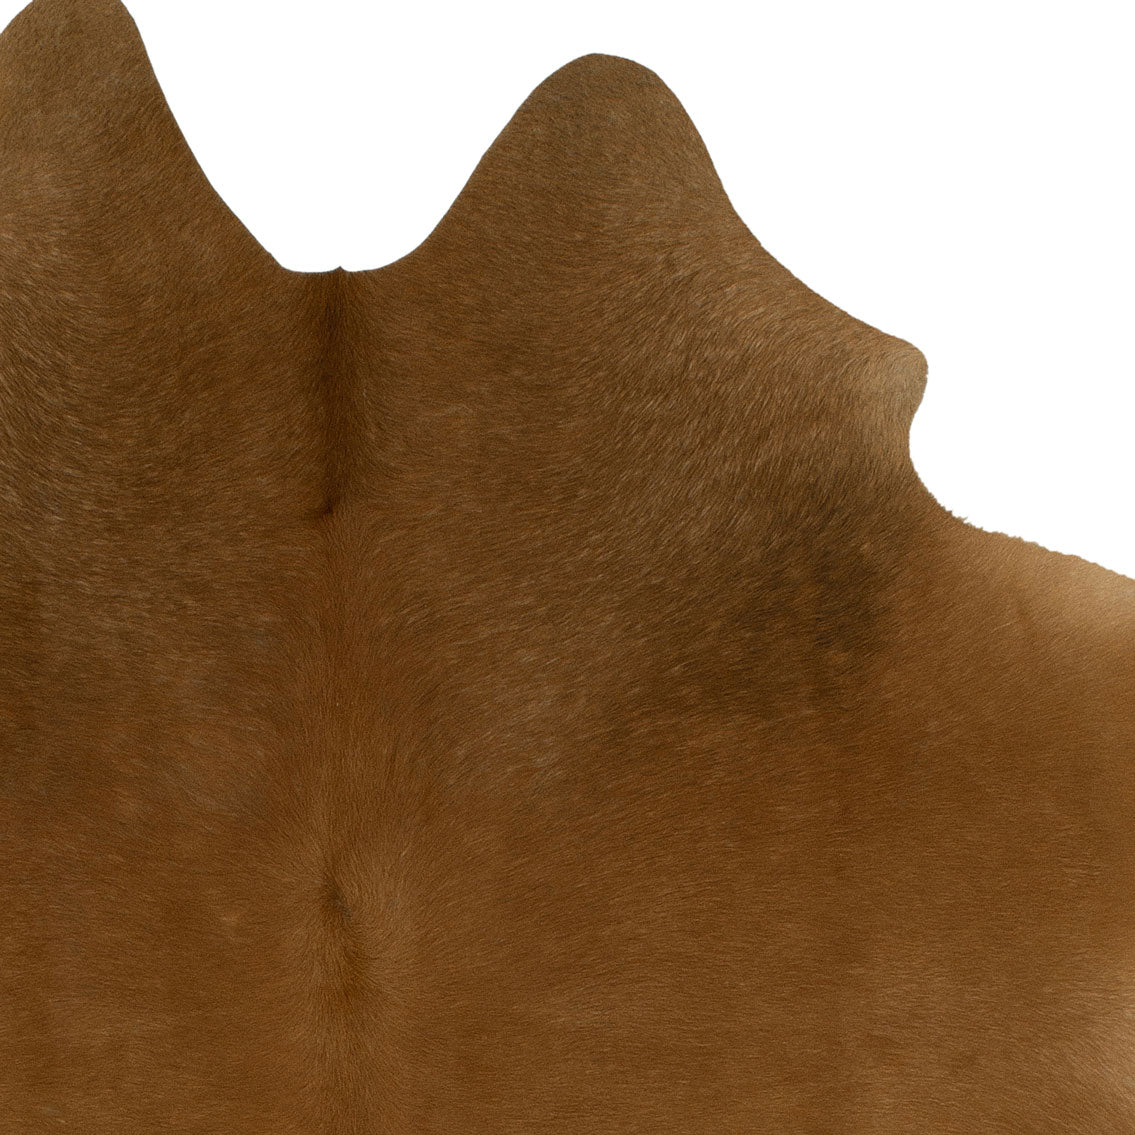 K156 | Unieke Koeienhuid| bruin, donkerbruin & wit| ca. 180 x 160cm